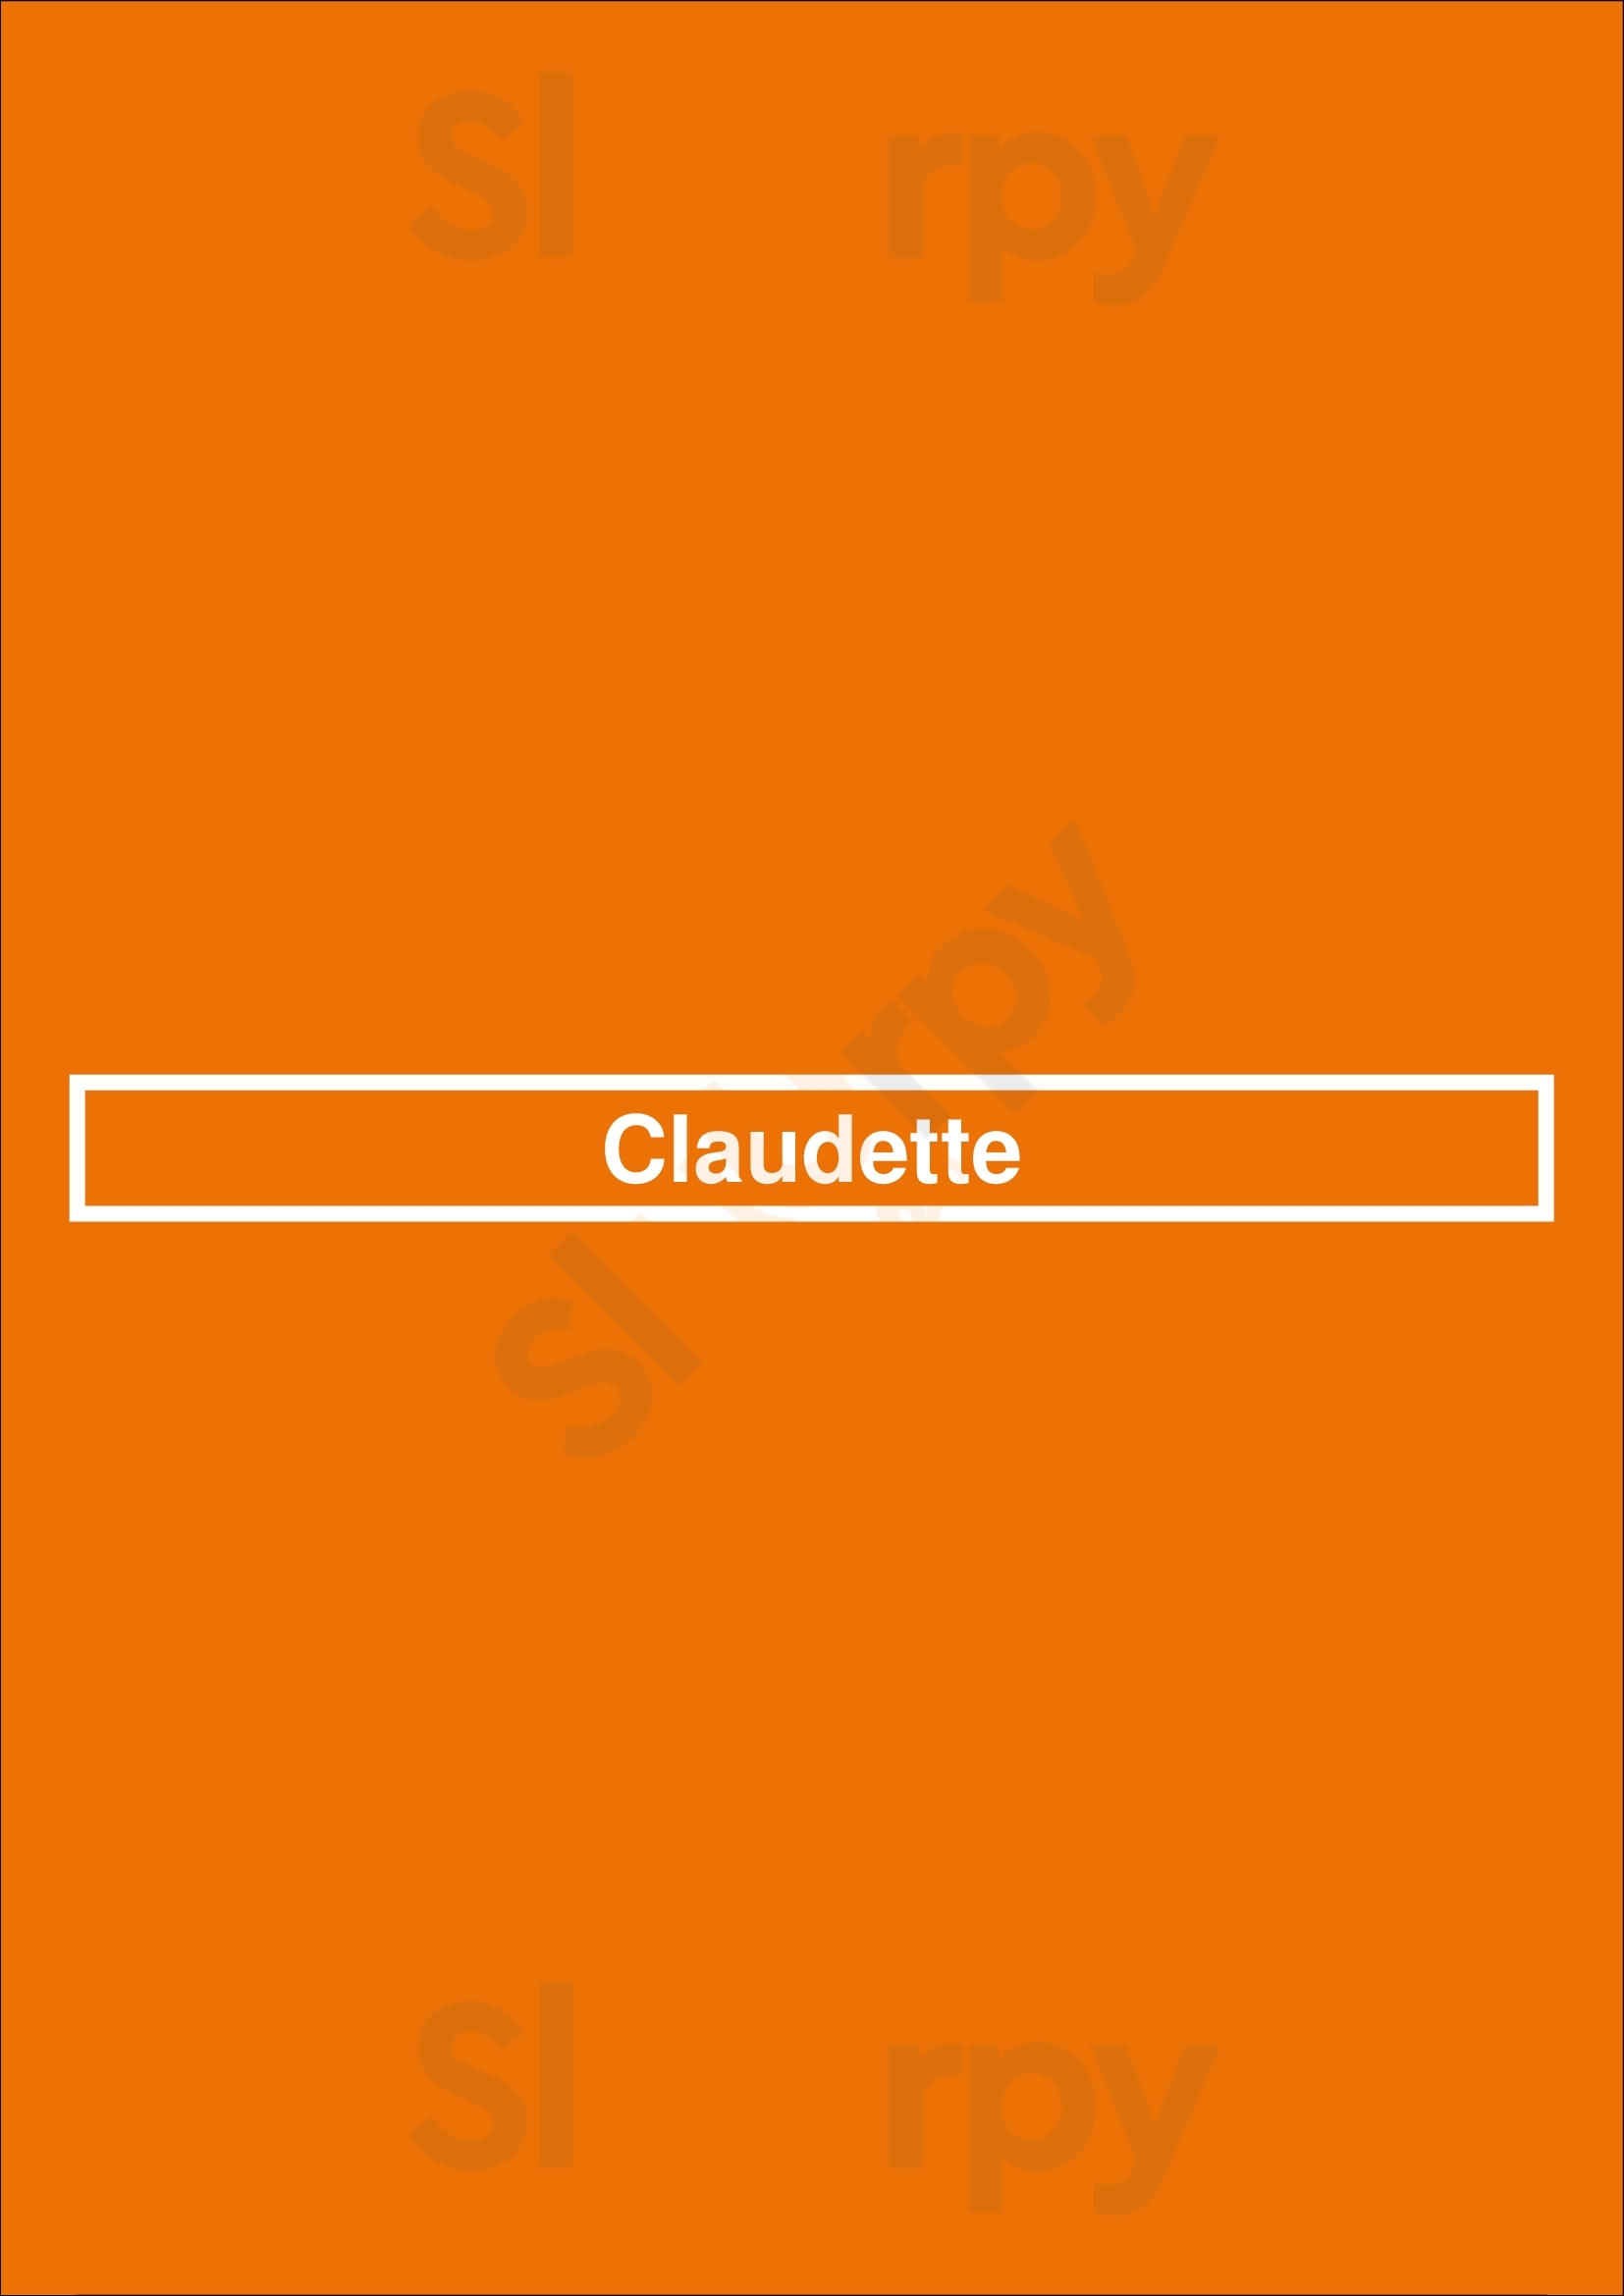 Claudette New York City Menu - 1